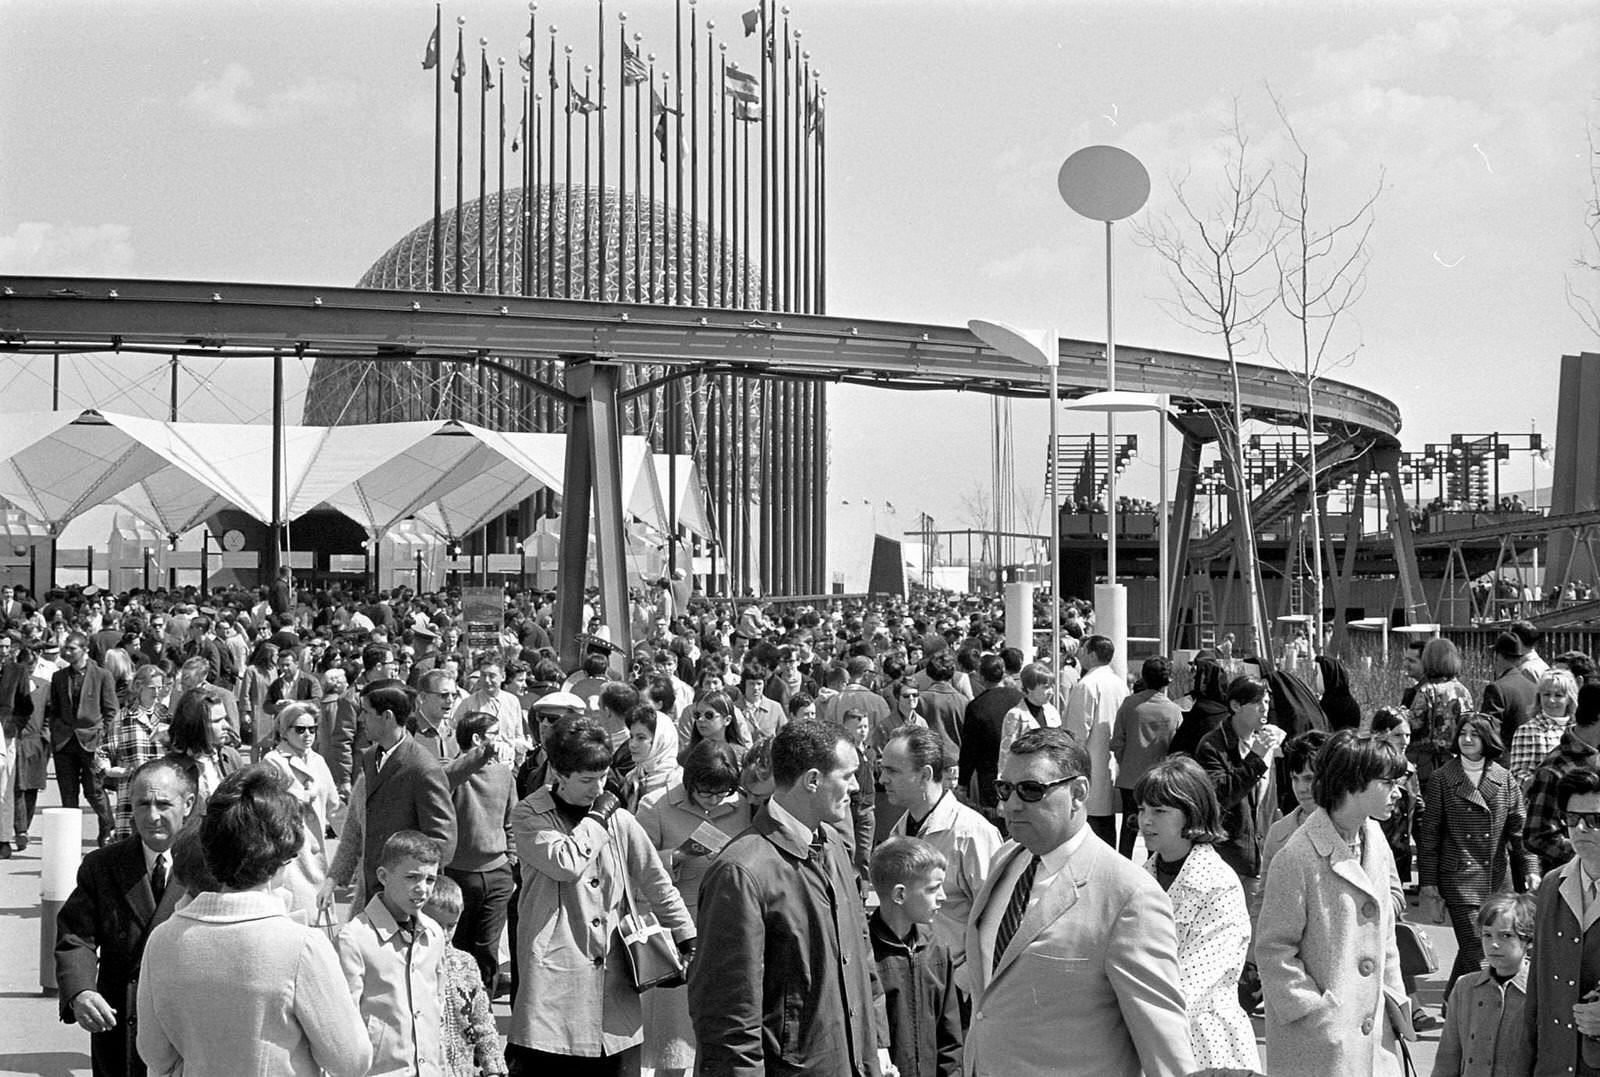 Exhibition Grounds, Epxo 1967